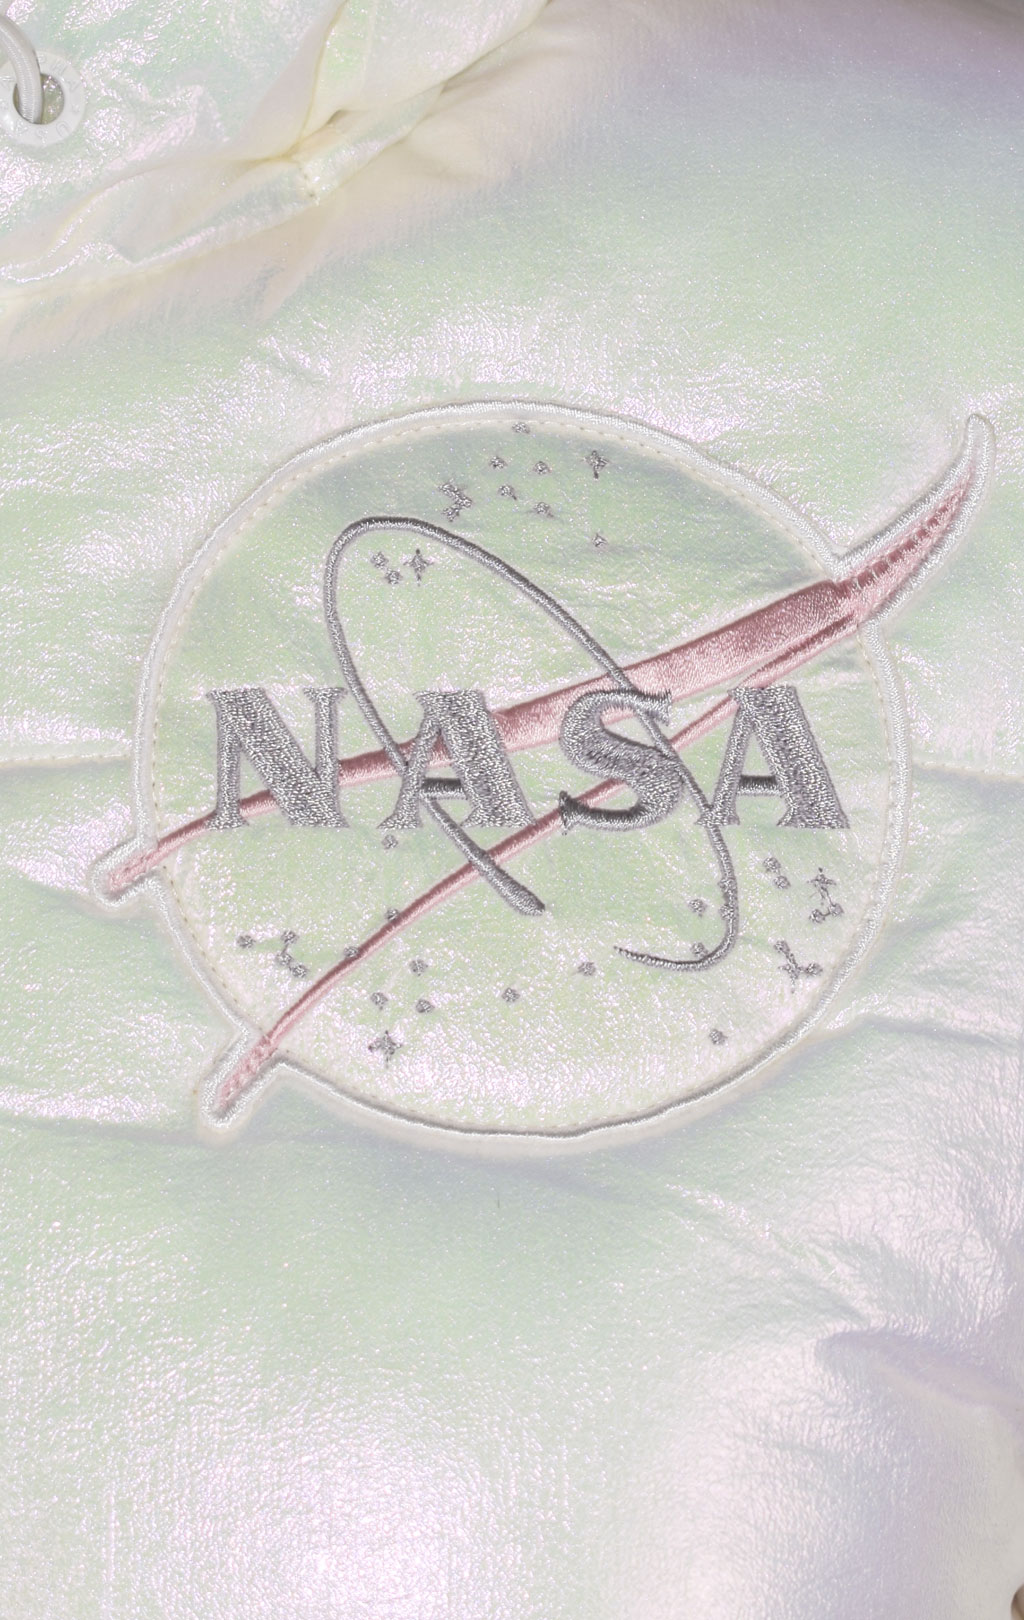 Женская куртка ALPHA INDUSTRIES HOODED PUFFER NASA white 